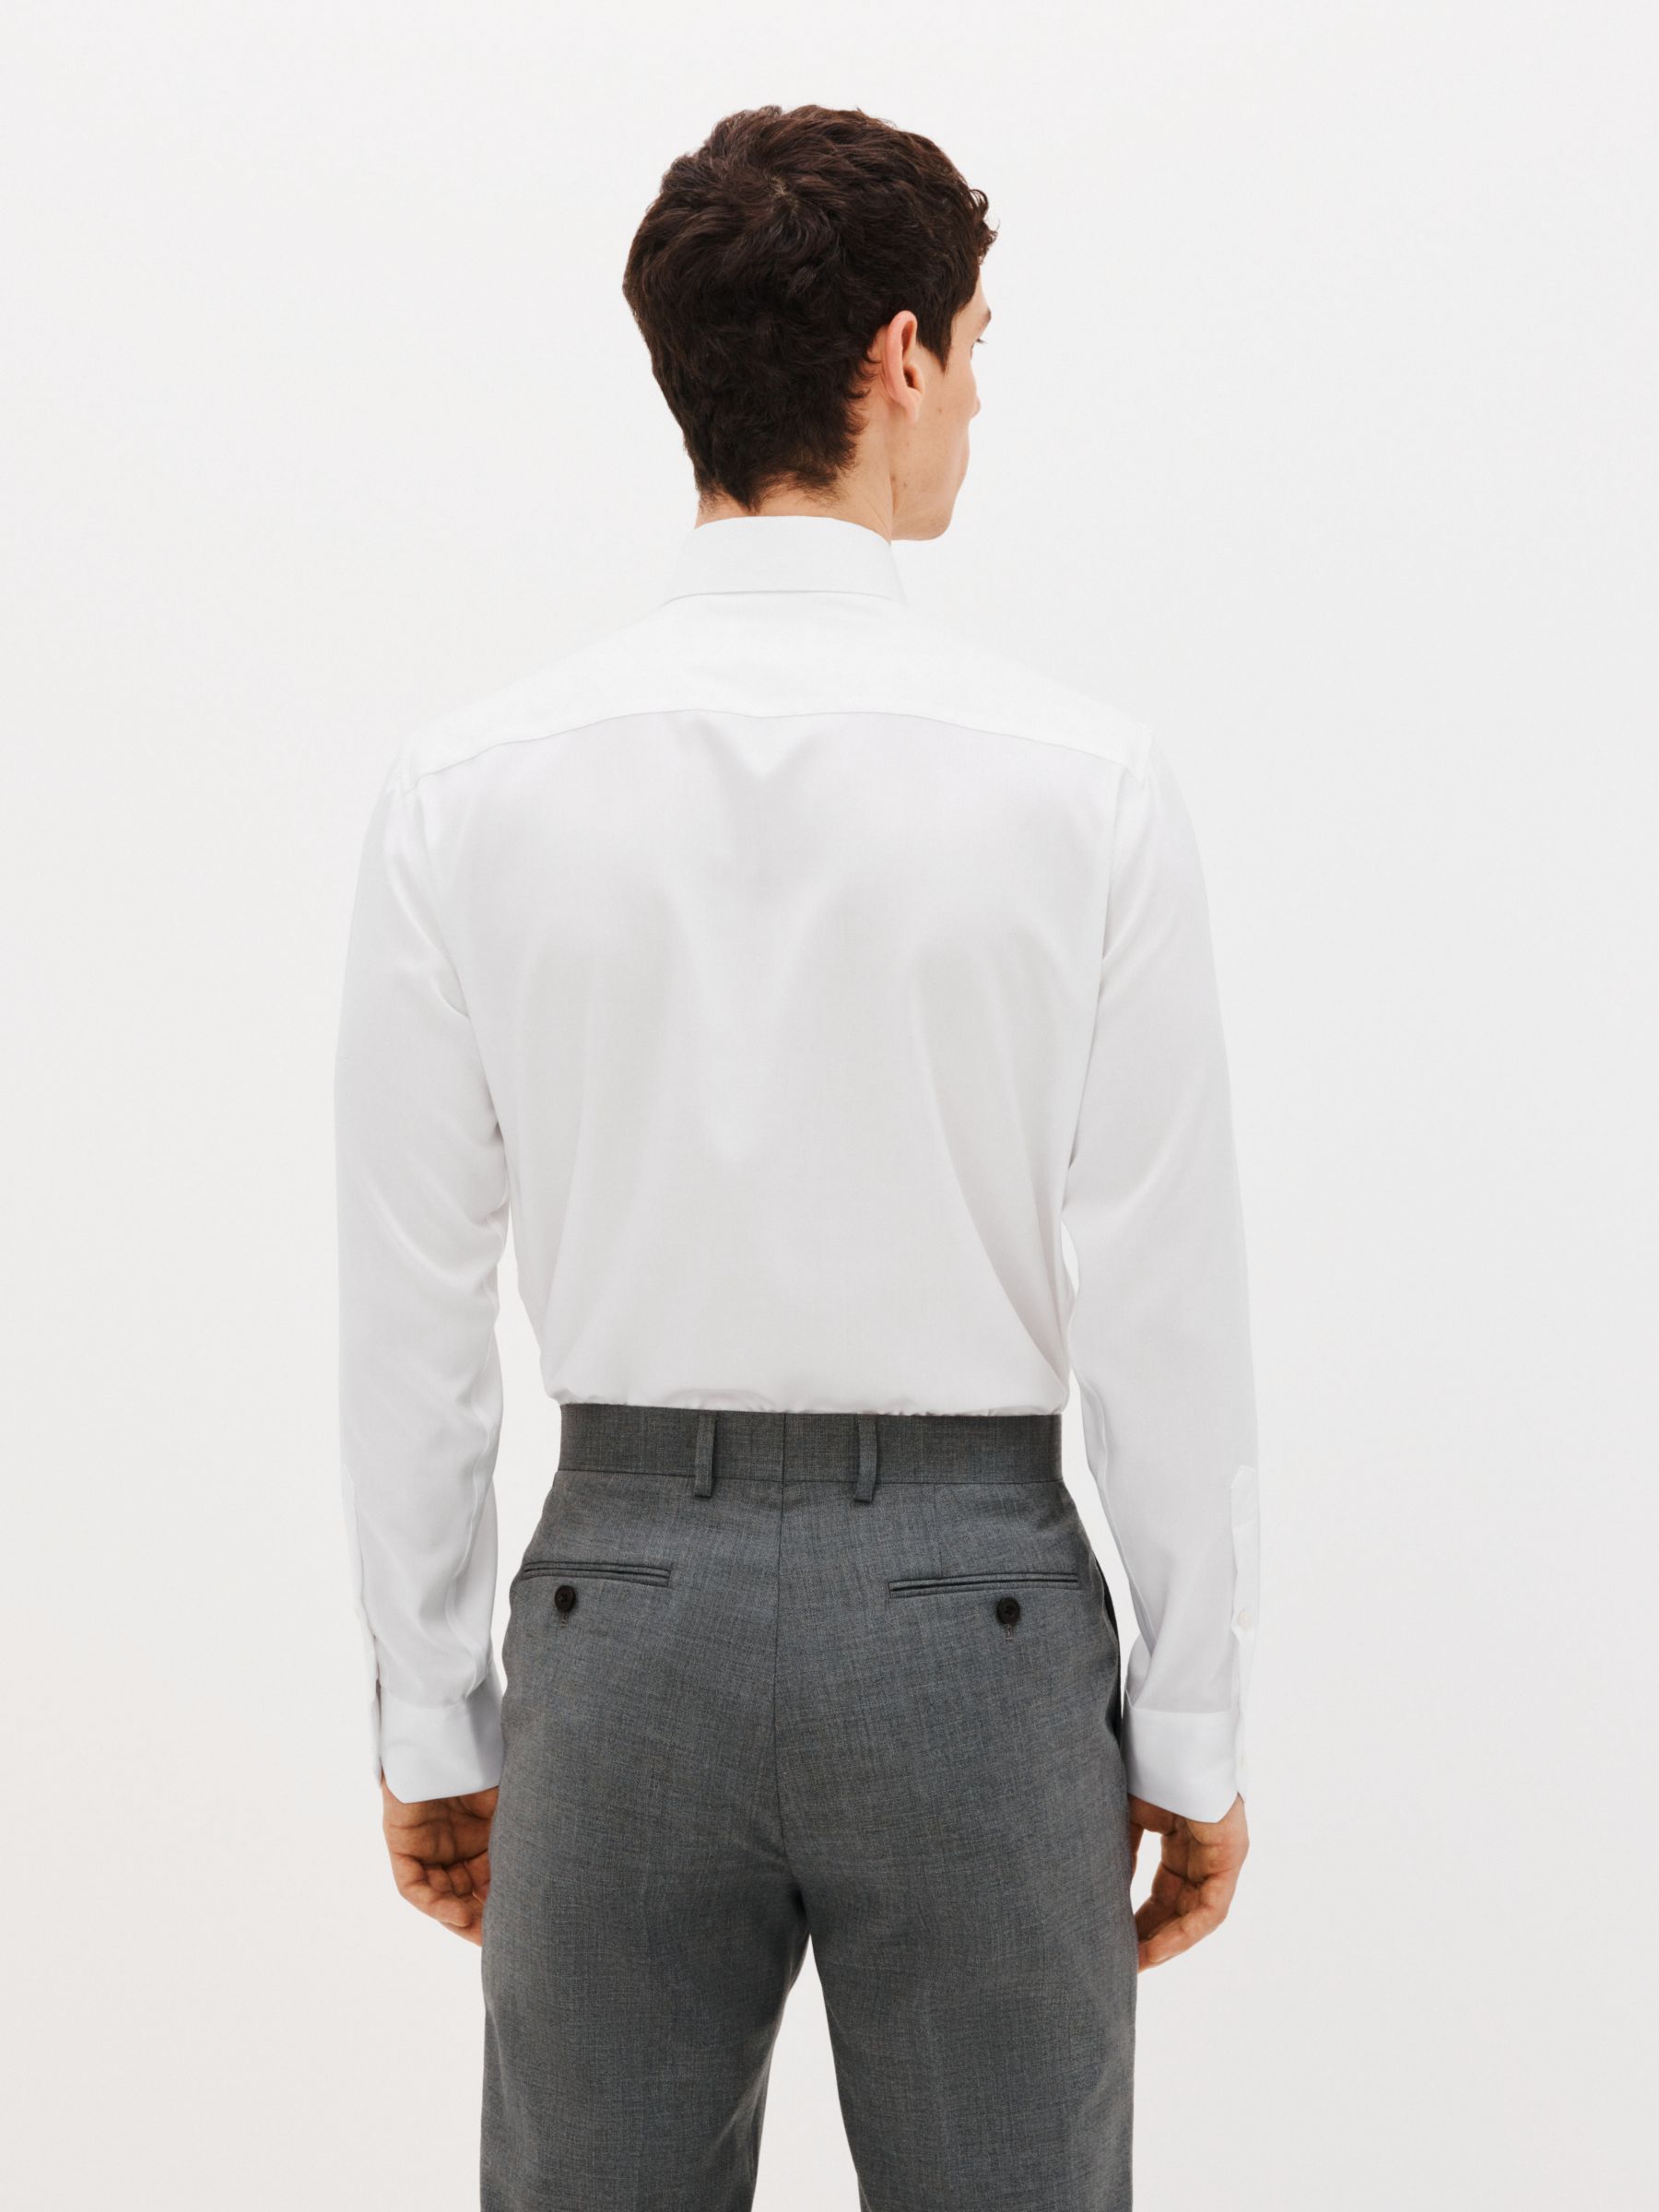 John Lewis Non Iron Twill Tailored Fit Shirt, White, 16.5L